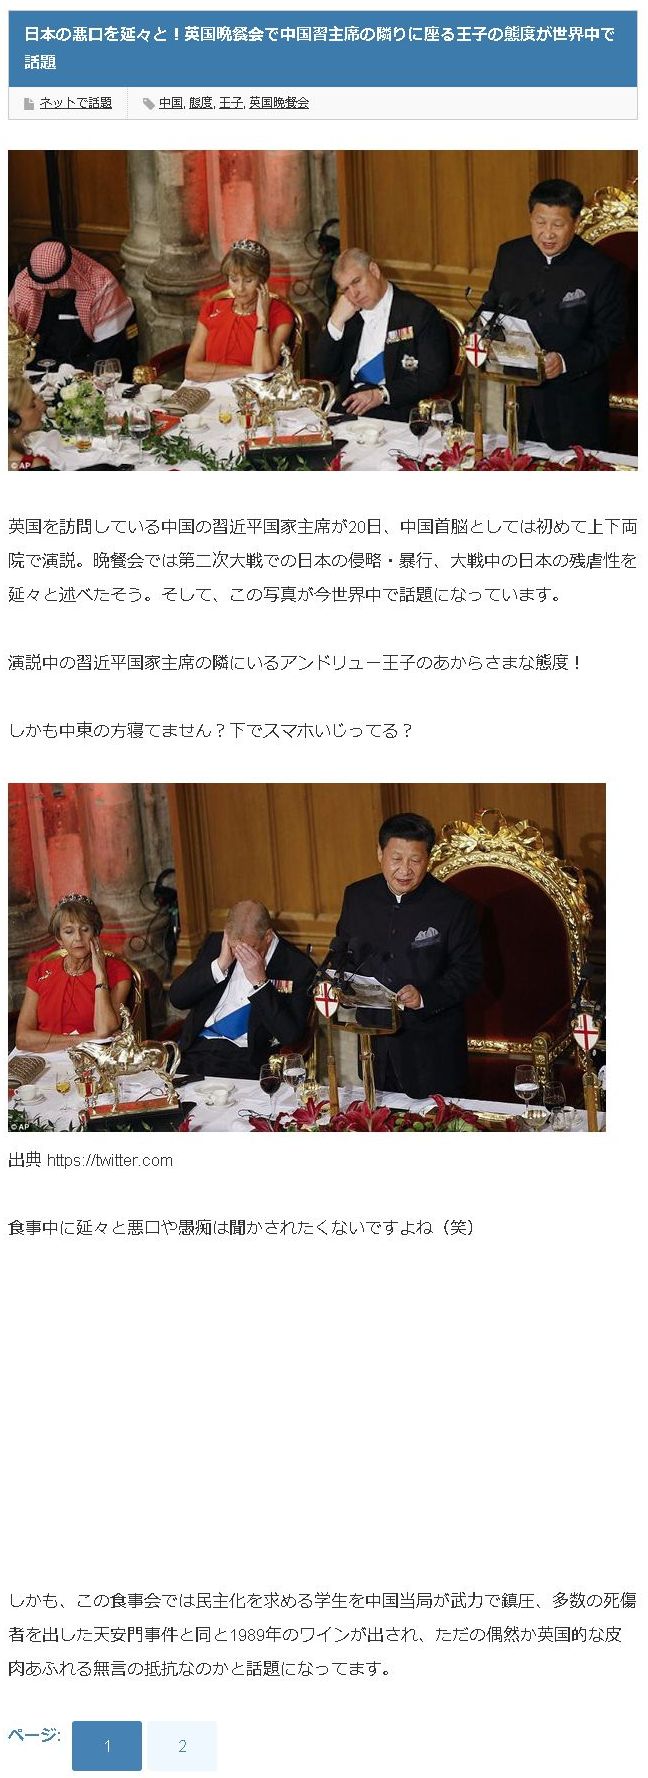 Share News Japan： 日本の悪口を延々と！英国晩餐